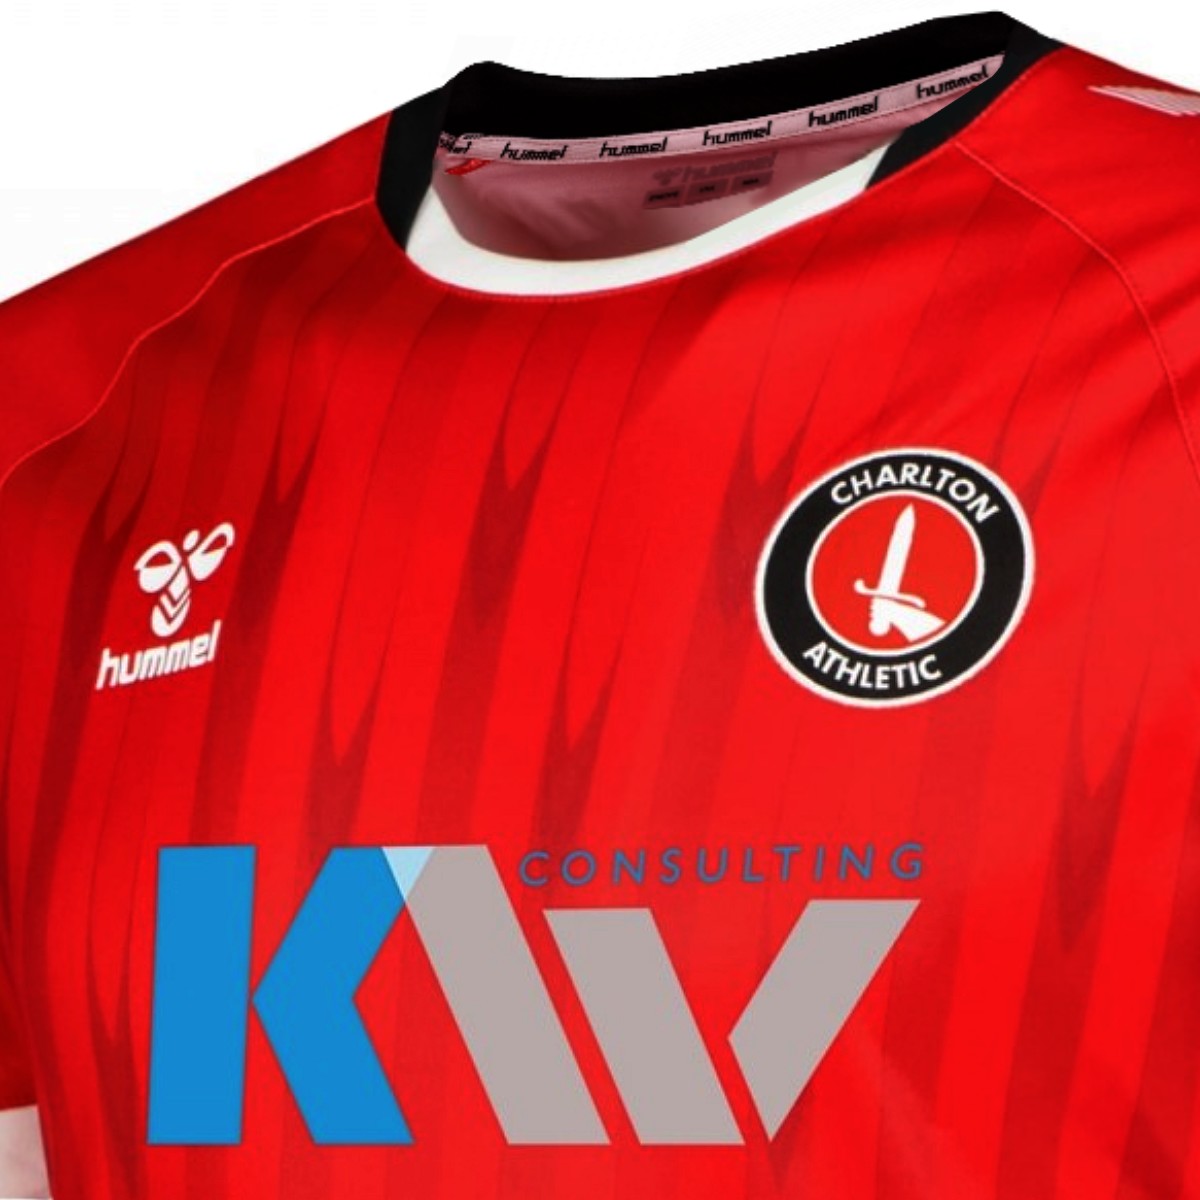 Charlton Athletic Home soccer jersey 2021/22 - Hummel –